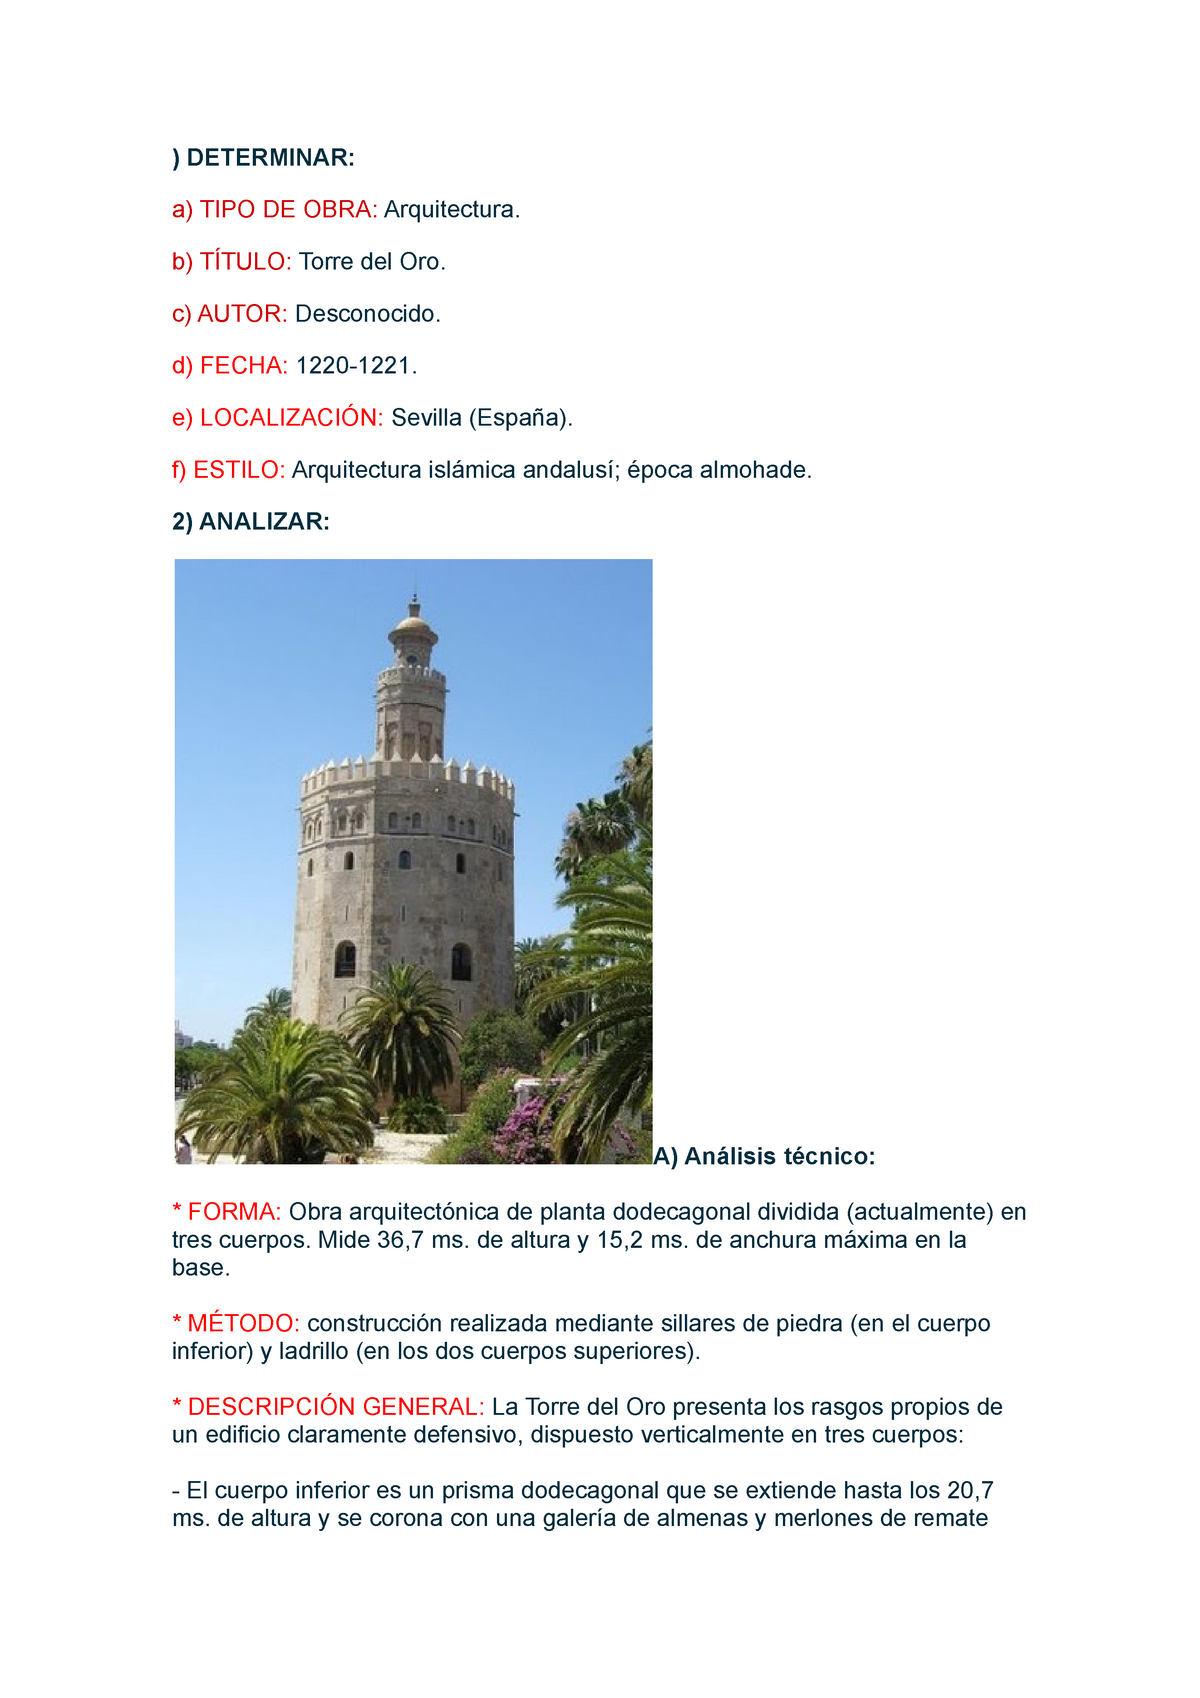 Comentario torre del oro - ) DETERMINAR: a) TIPO DE OBRA: Arquitectura. b)  TÍTULO: Torre del Oro. c) - Studocu